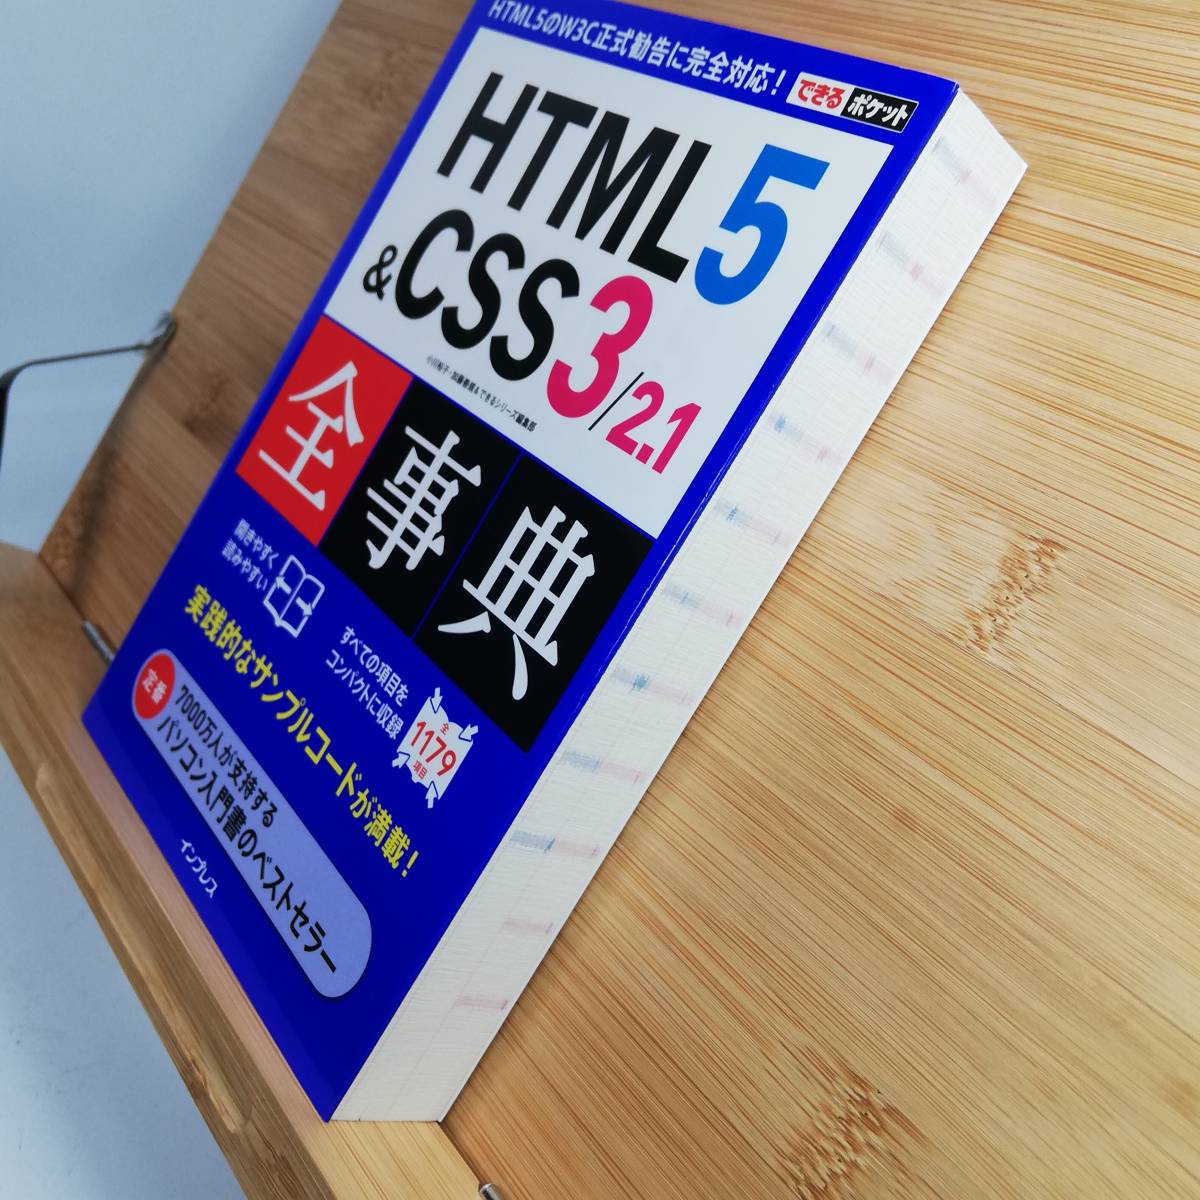 HTML5  CSS3 2.1全事典